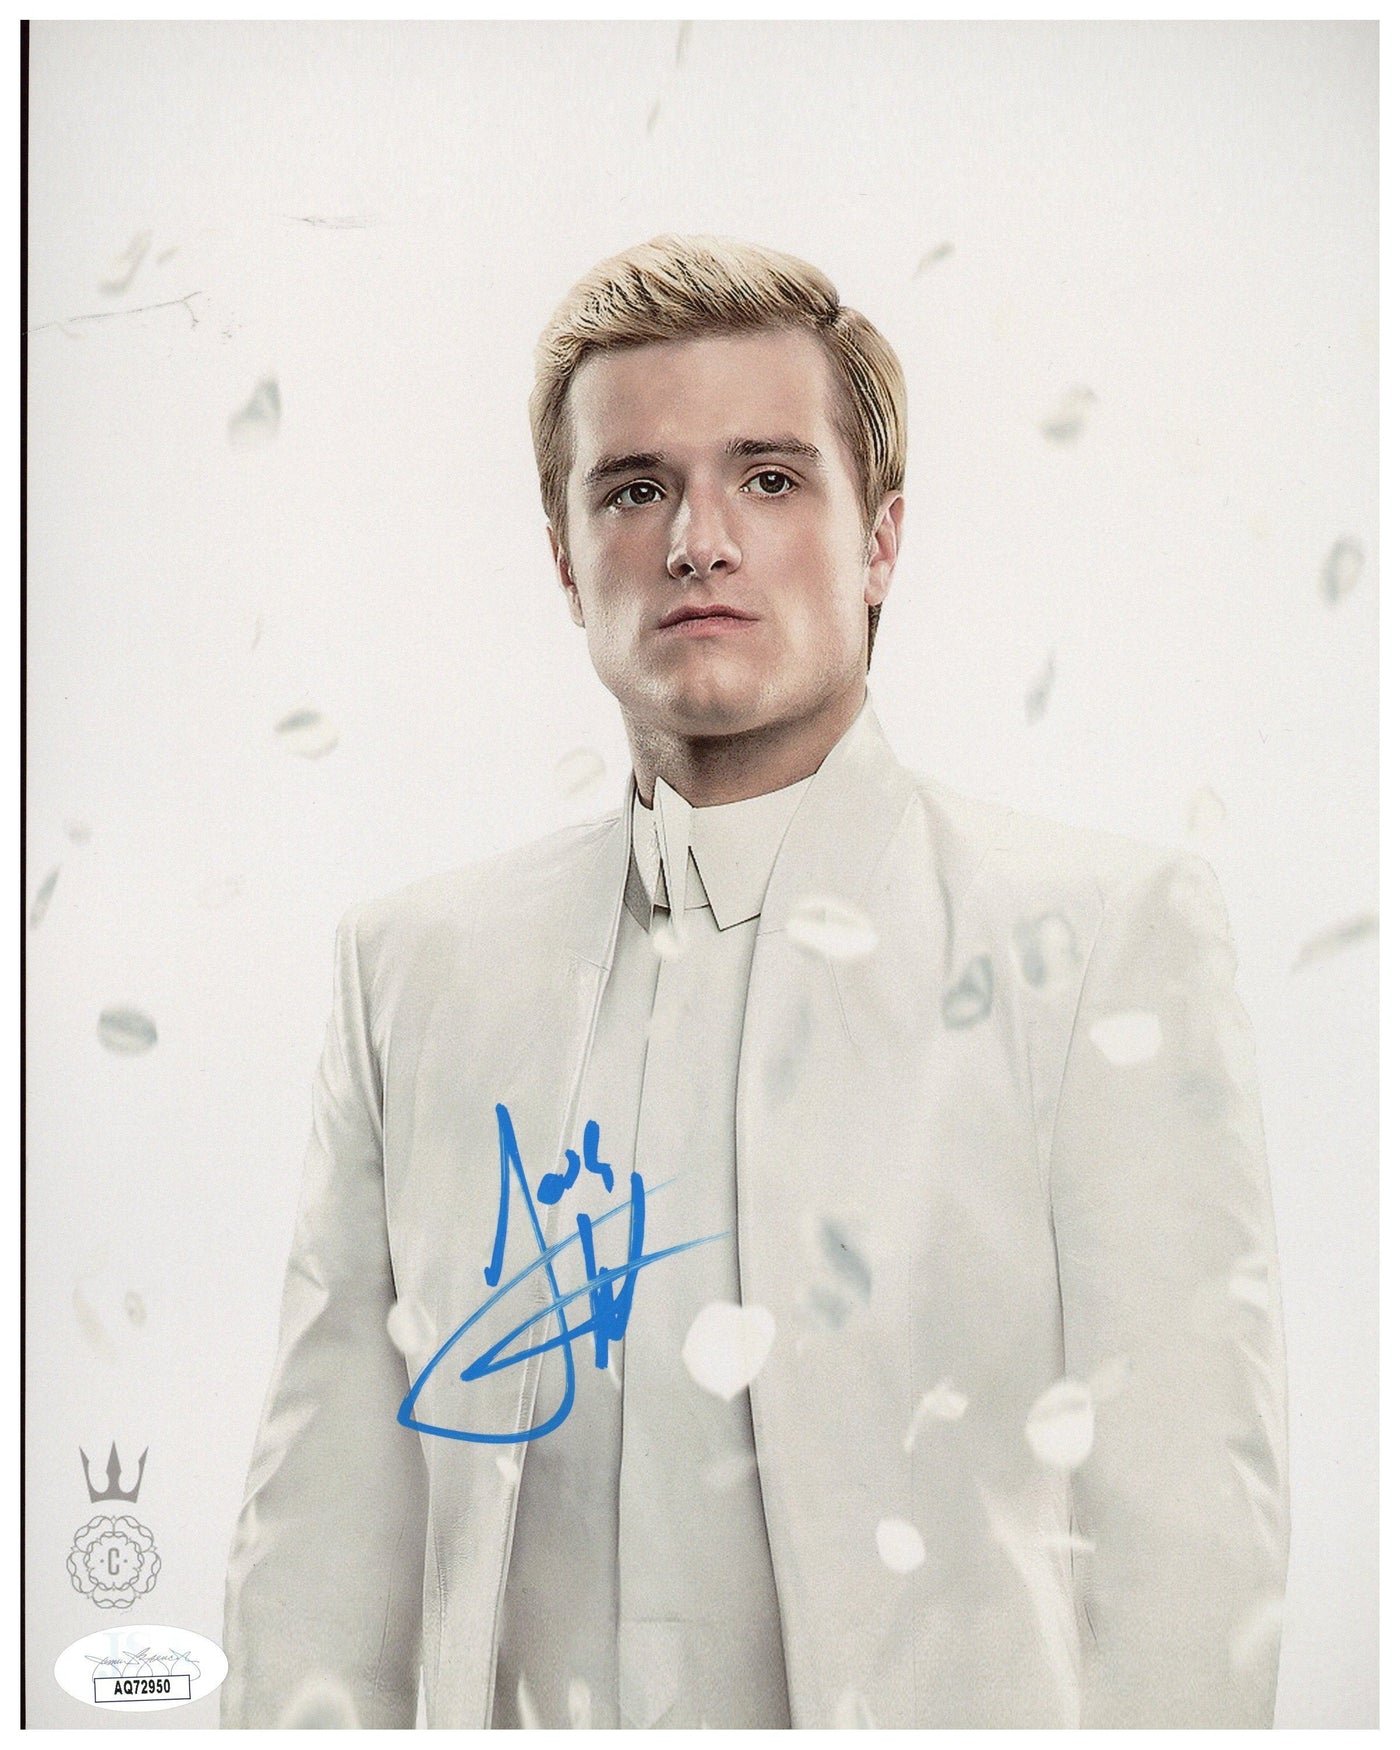 Josh Hutcherson Signed 8x10 Photo The Hunger Games Peeta Mellark Autographed JSA 3